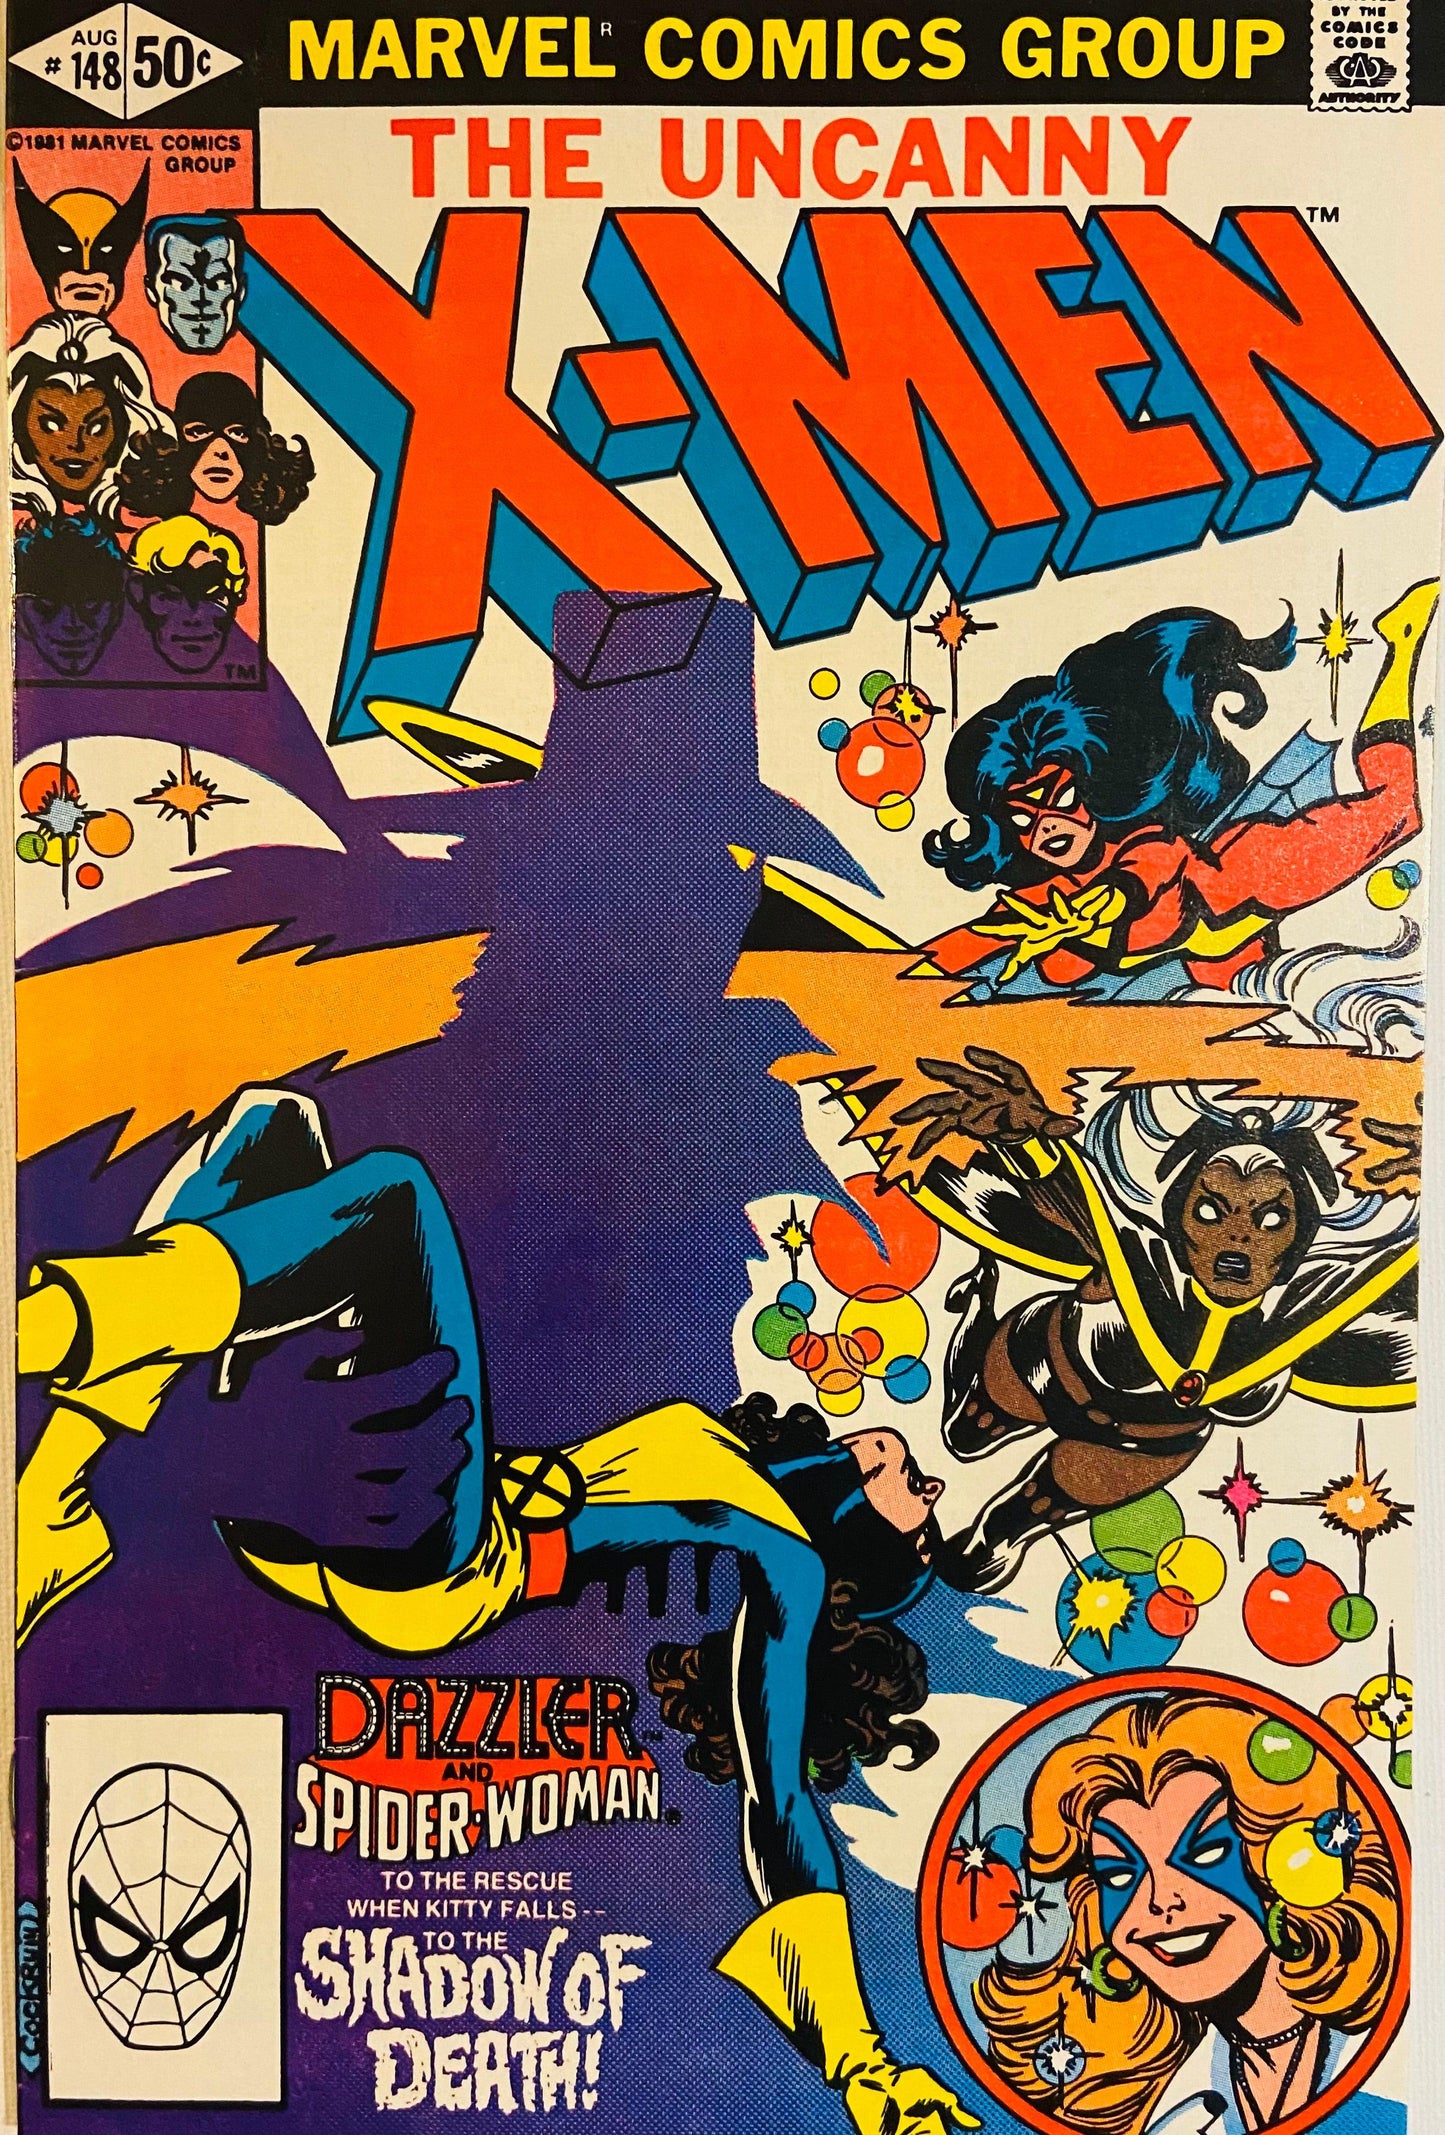 Uncanny X-men #148 - HolyGrail Comix